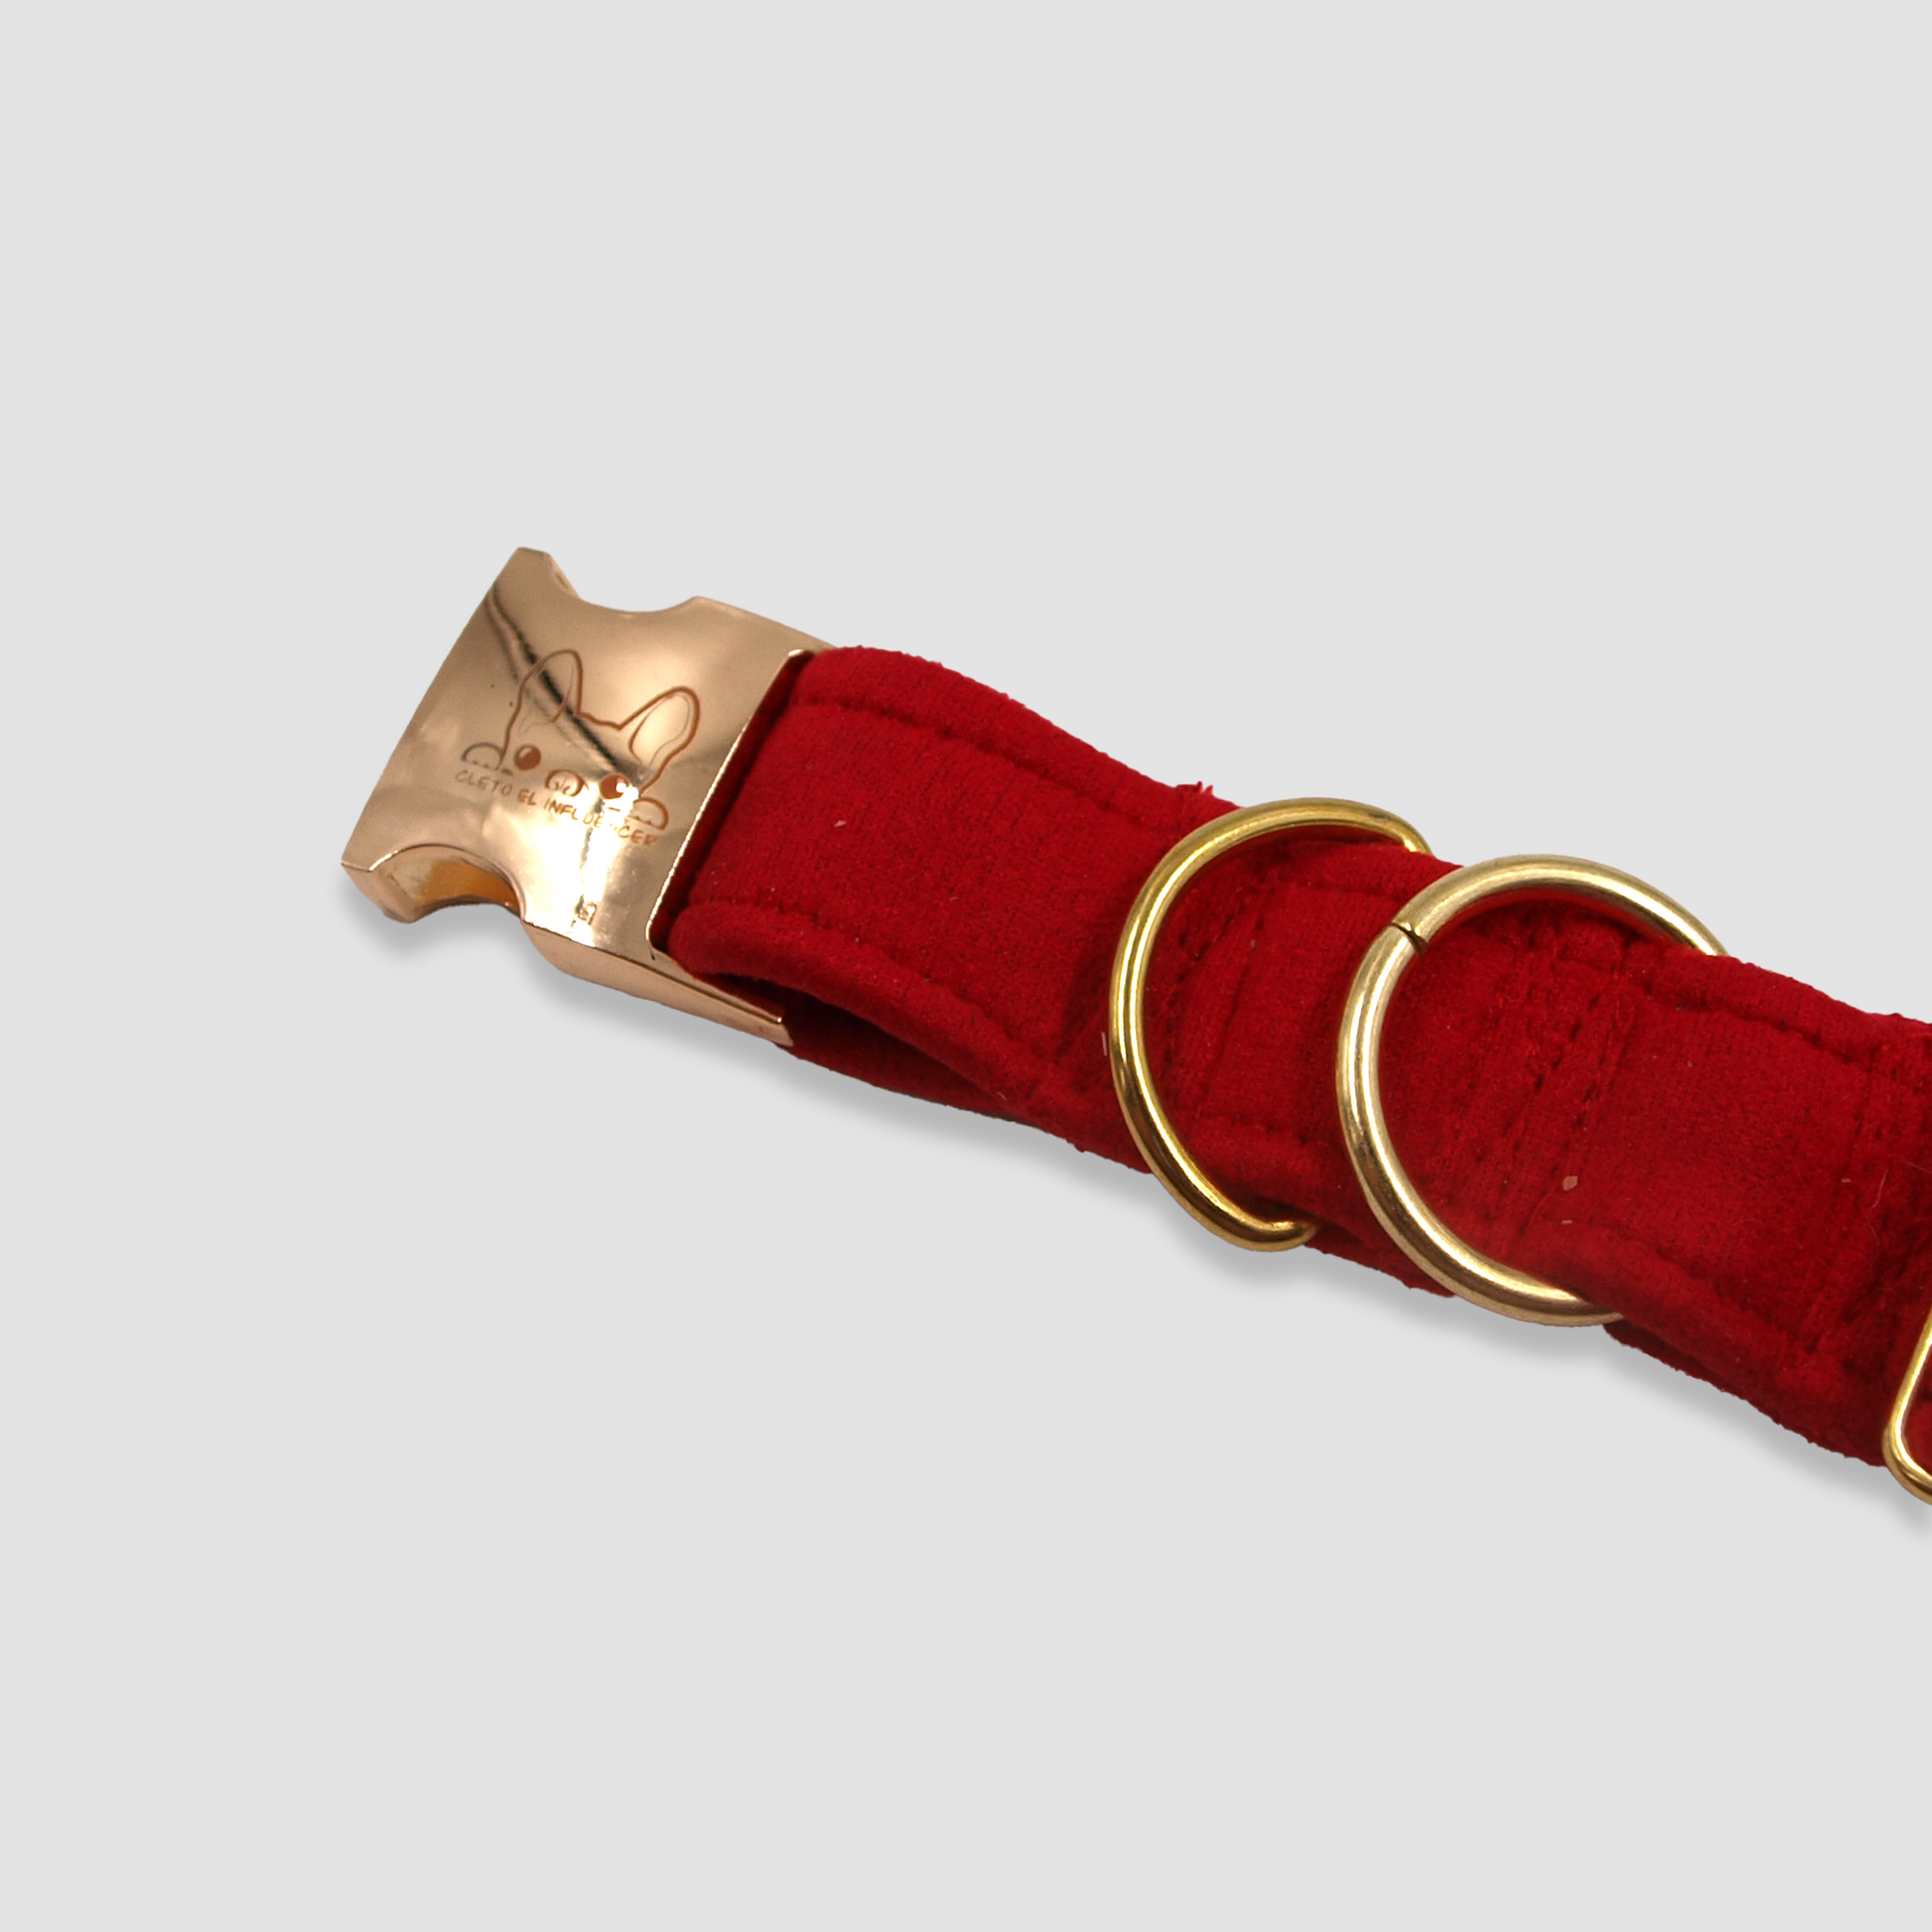 Collar para mascota color rojo con hebilla dorada.